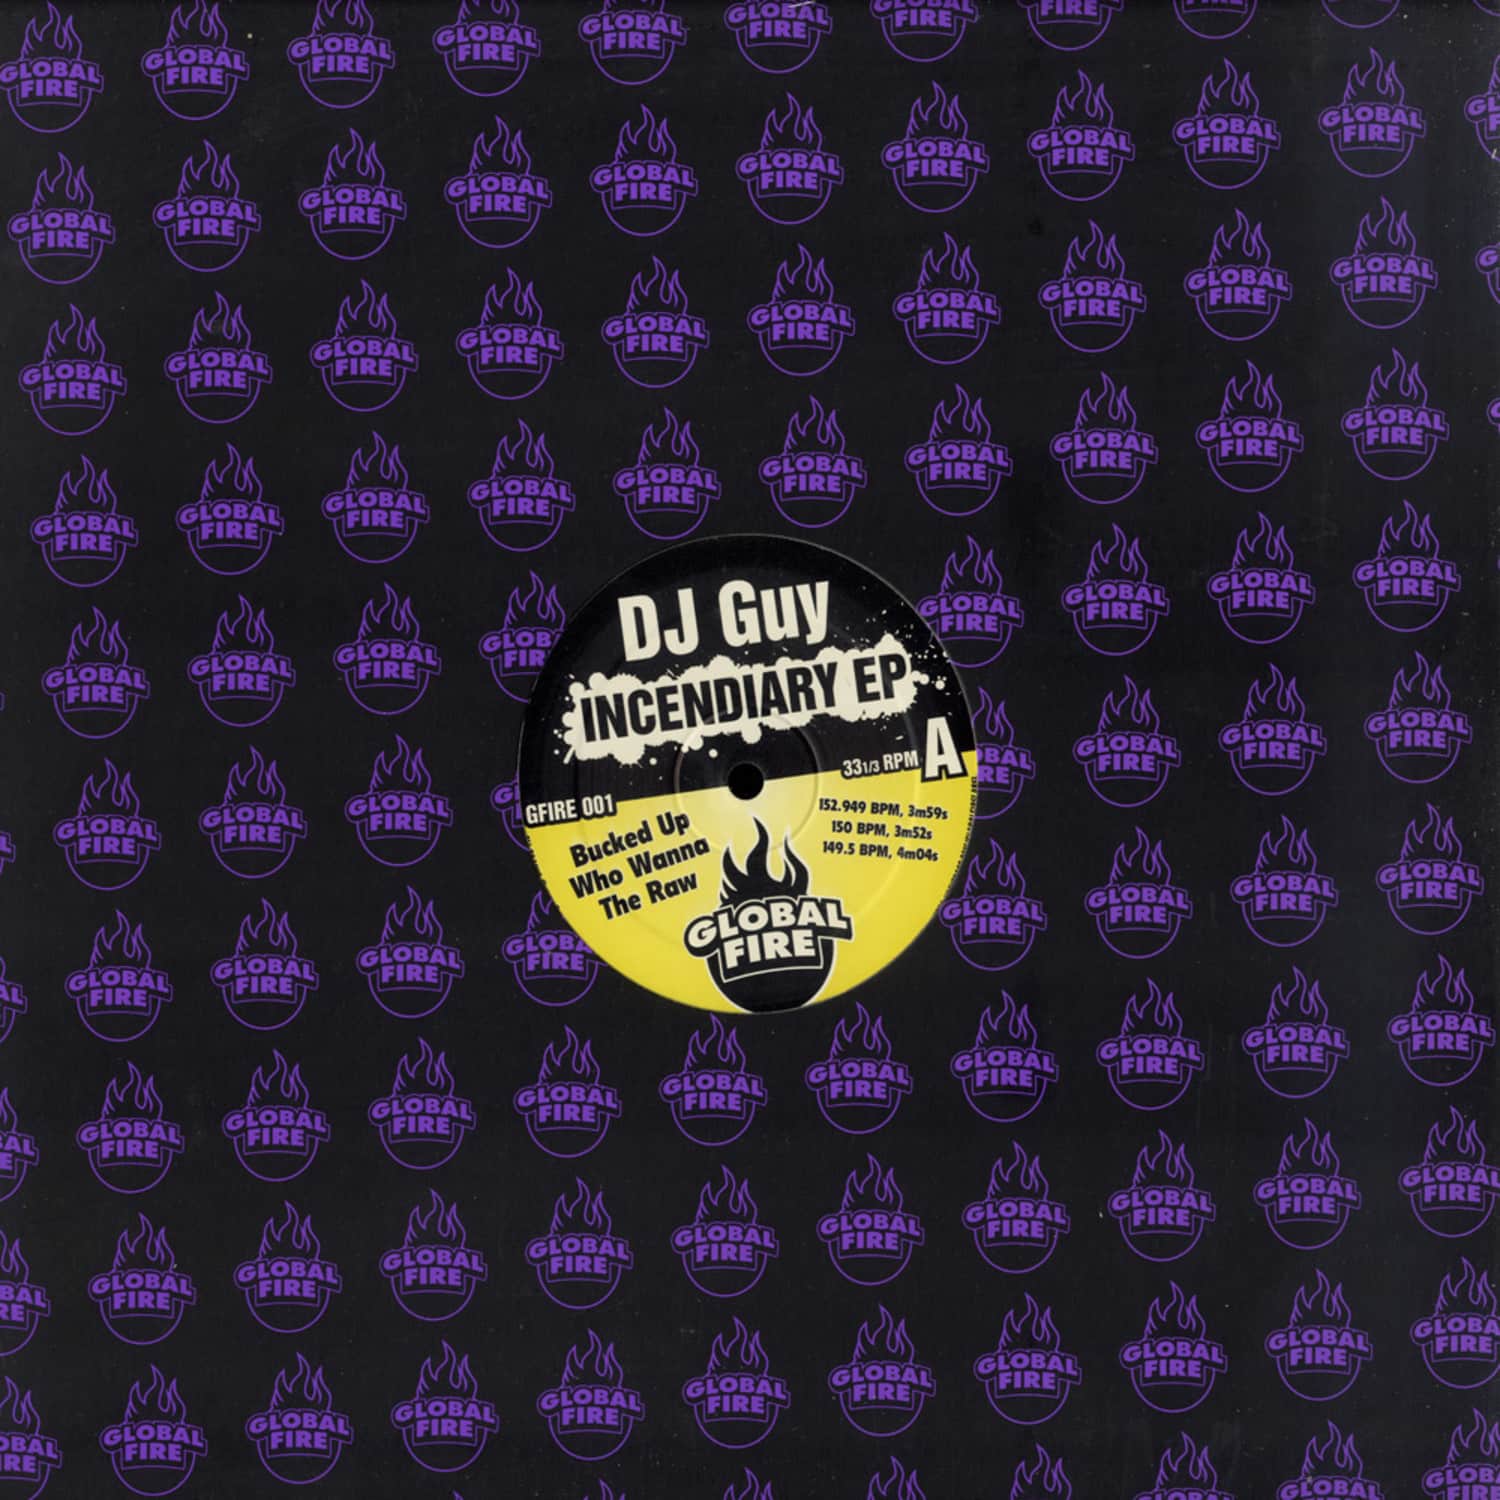 DJ Guy - INCENDIARY EP